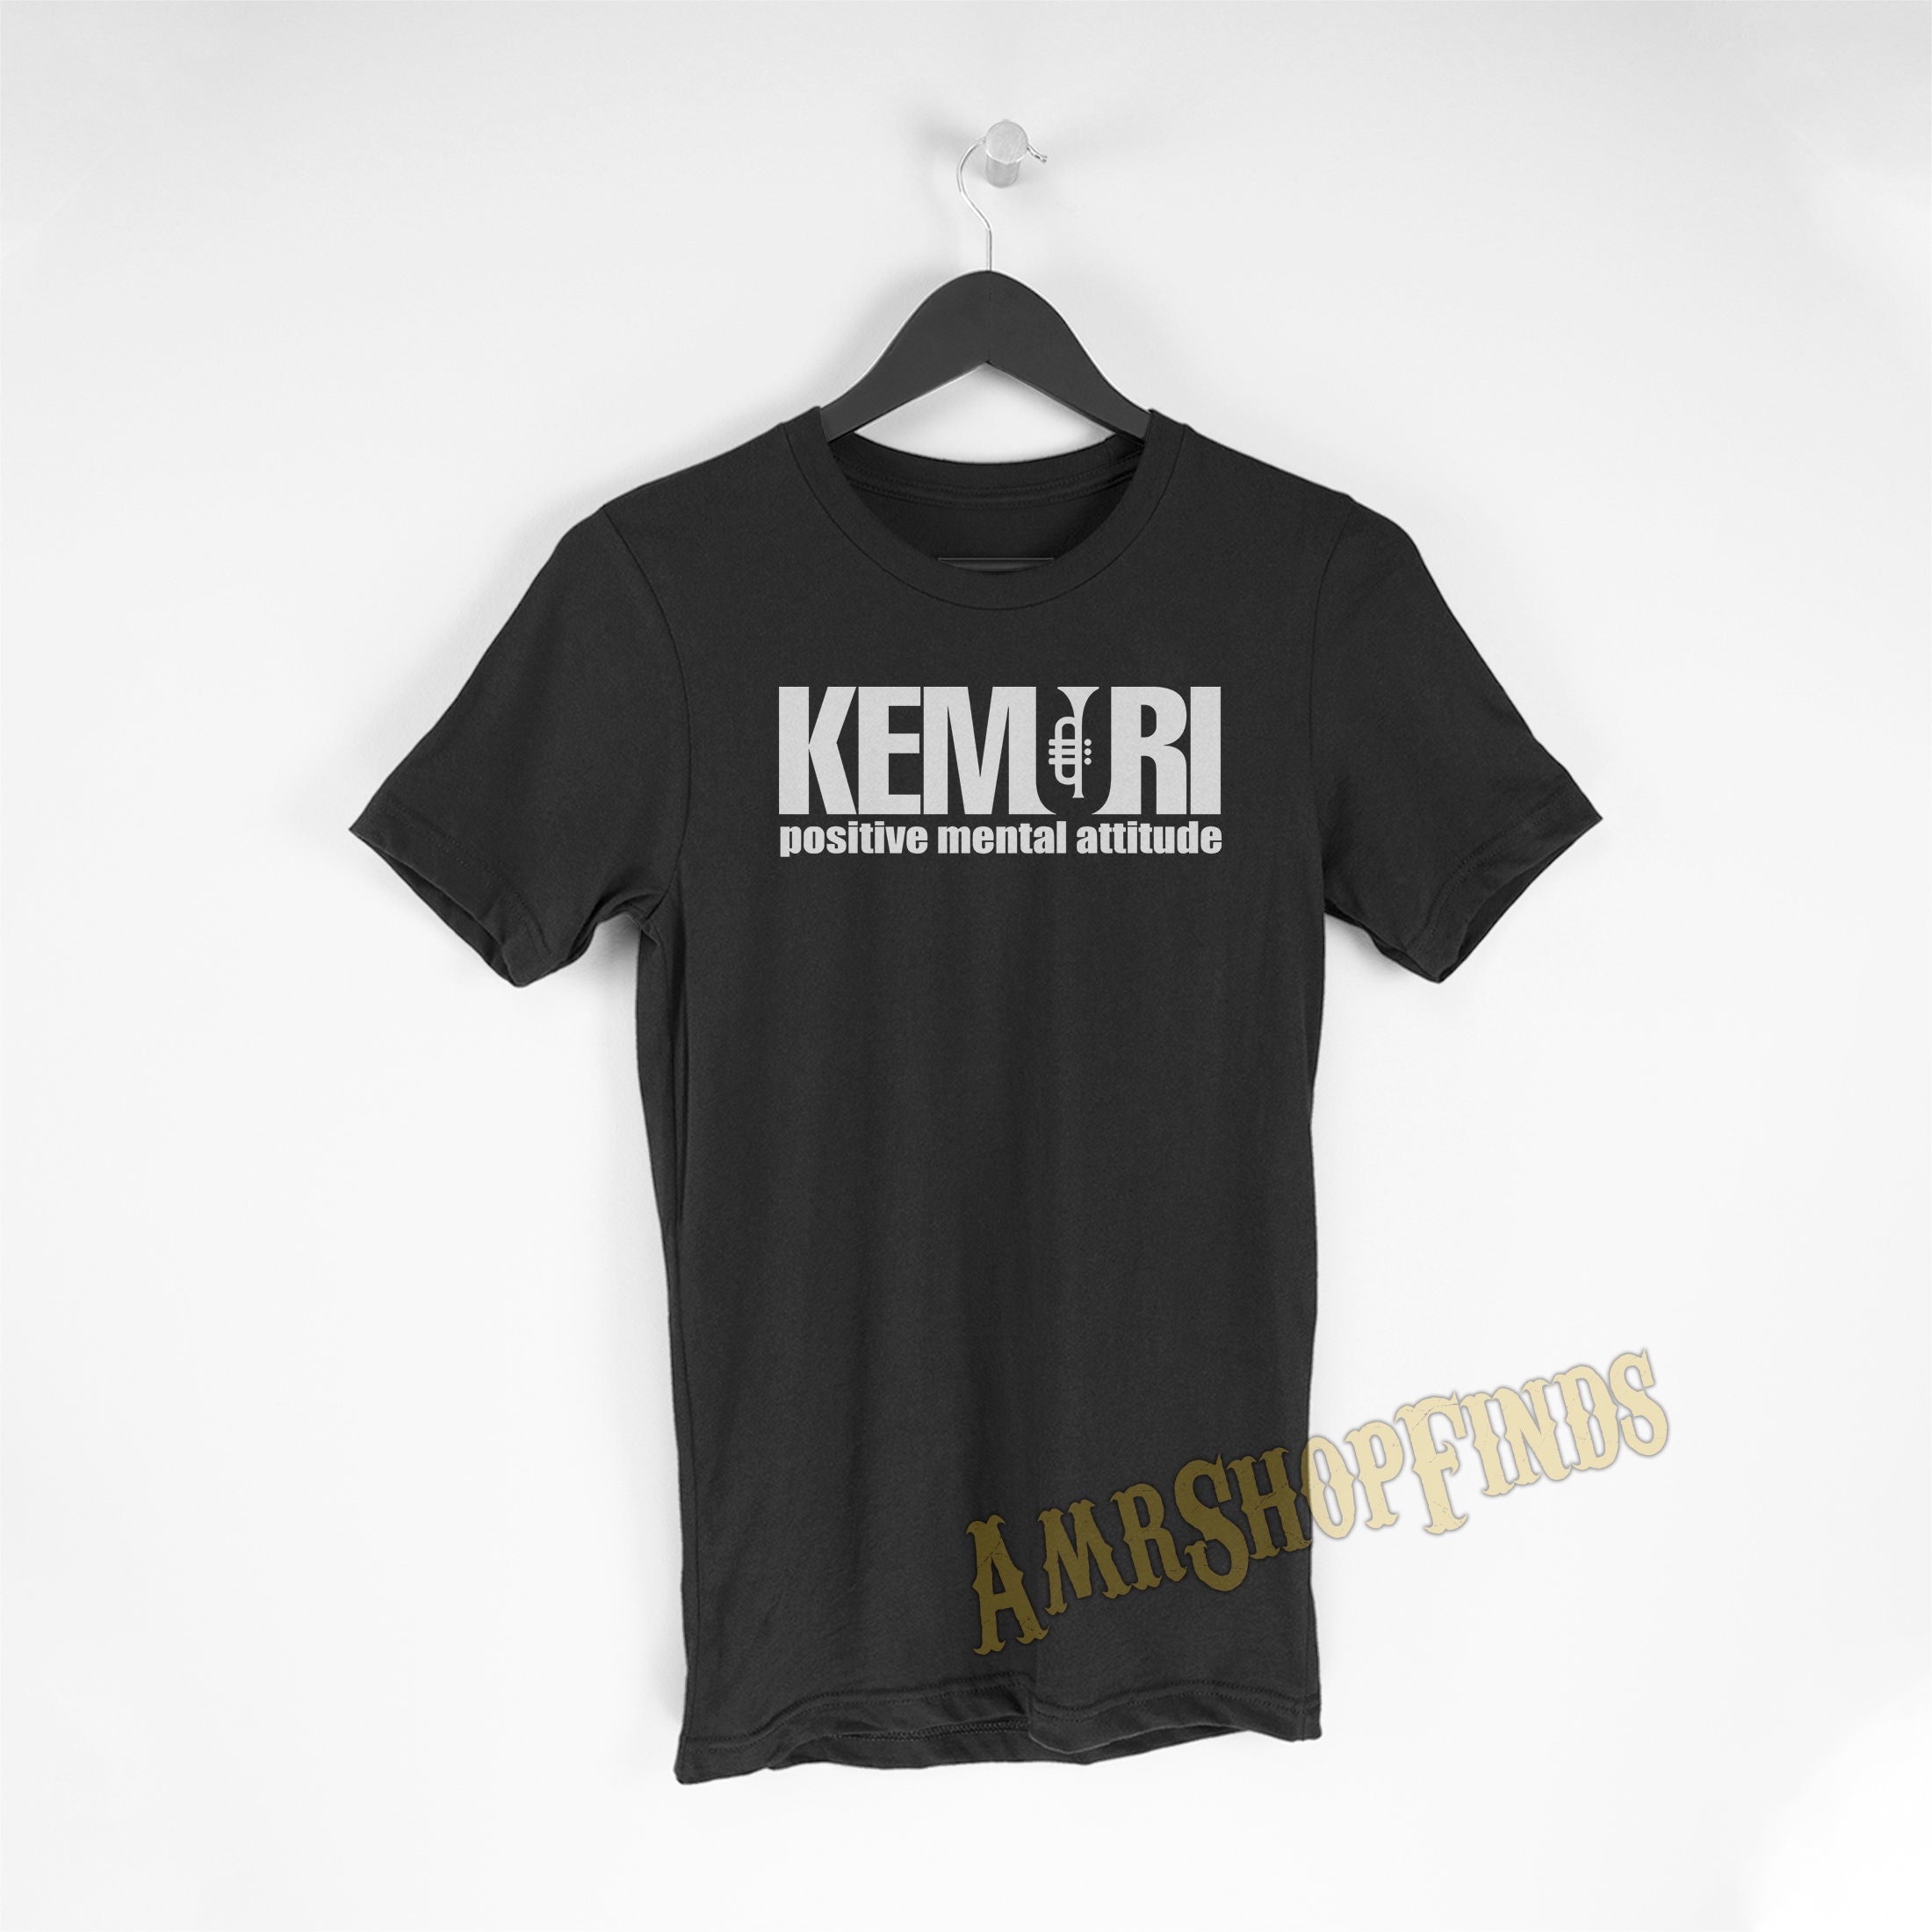 Kemuri Band T-shirt Japanese American Ska Punk Music Band Fumio Ito PMA  Positive Mental Attitude Black White T-shirt S-3XL 